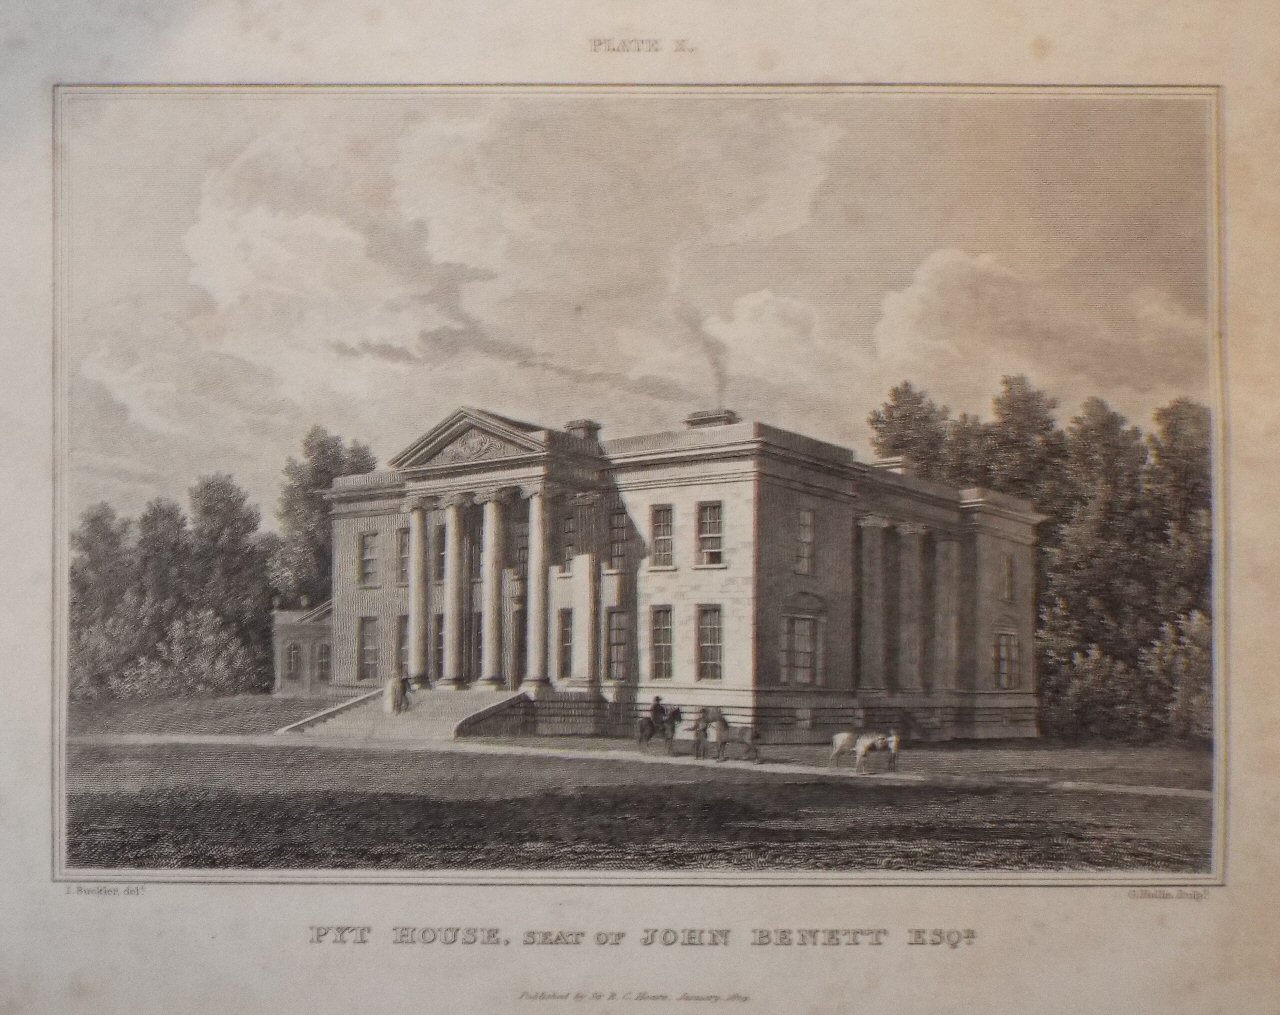 Print - Pyt House, the Seat of John Bennett Esqr. - Hollis